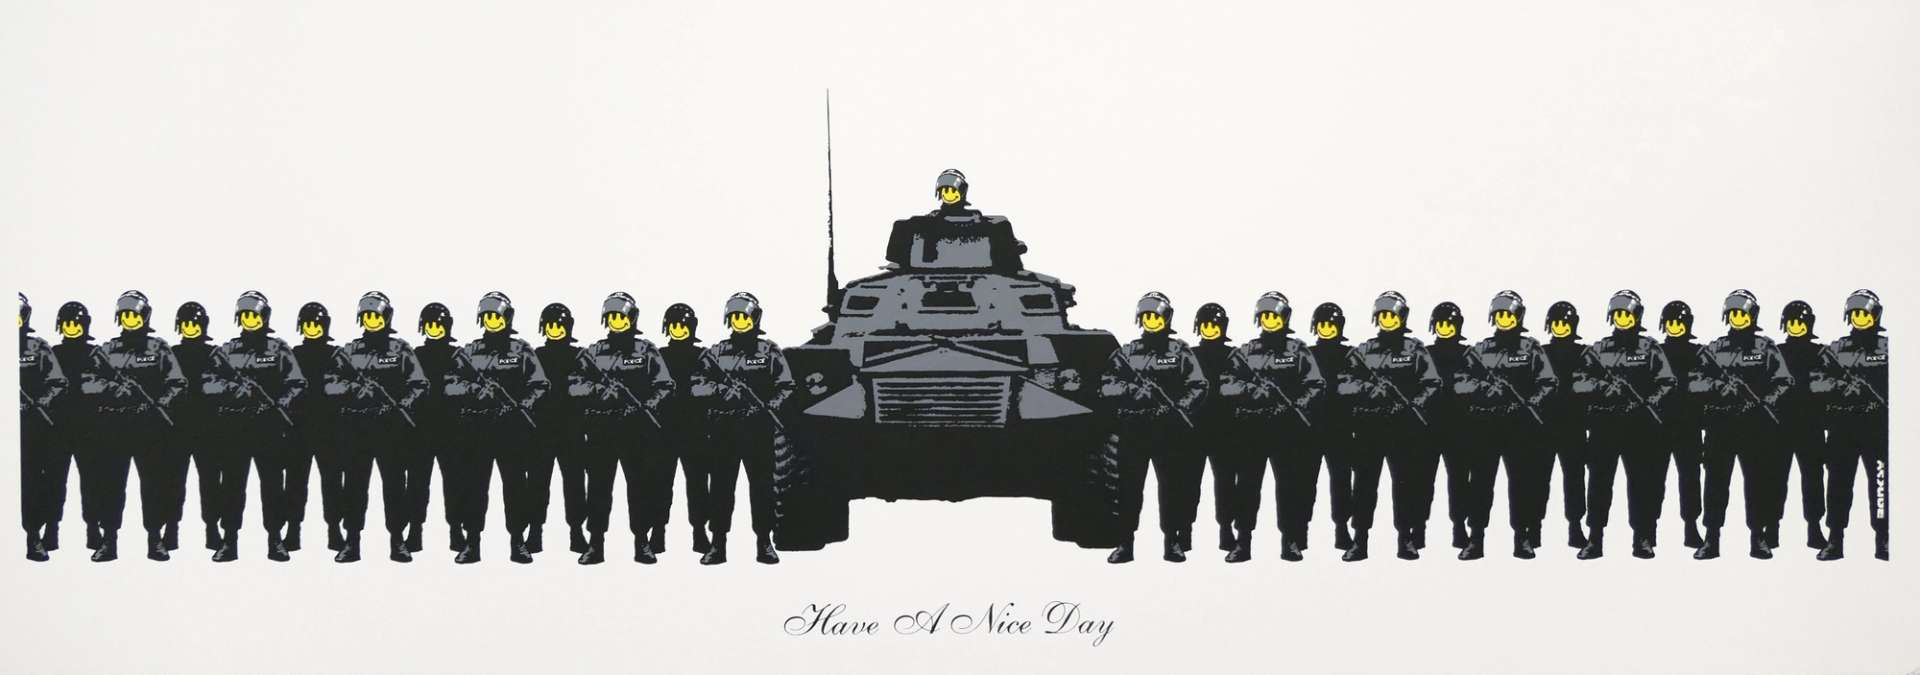 Have a Nice Day by Banksy - MyArtBroker